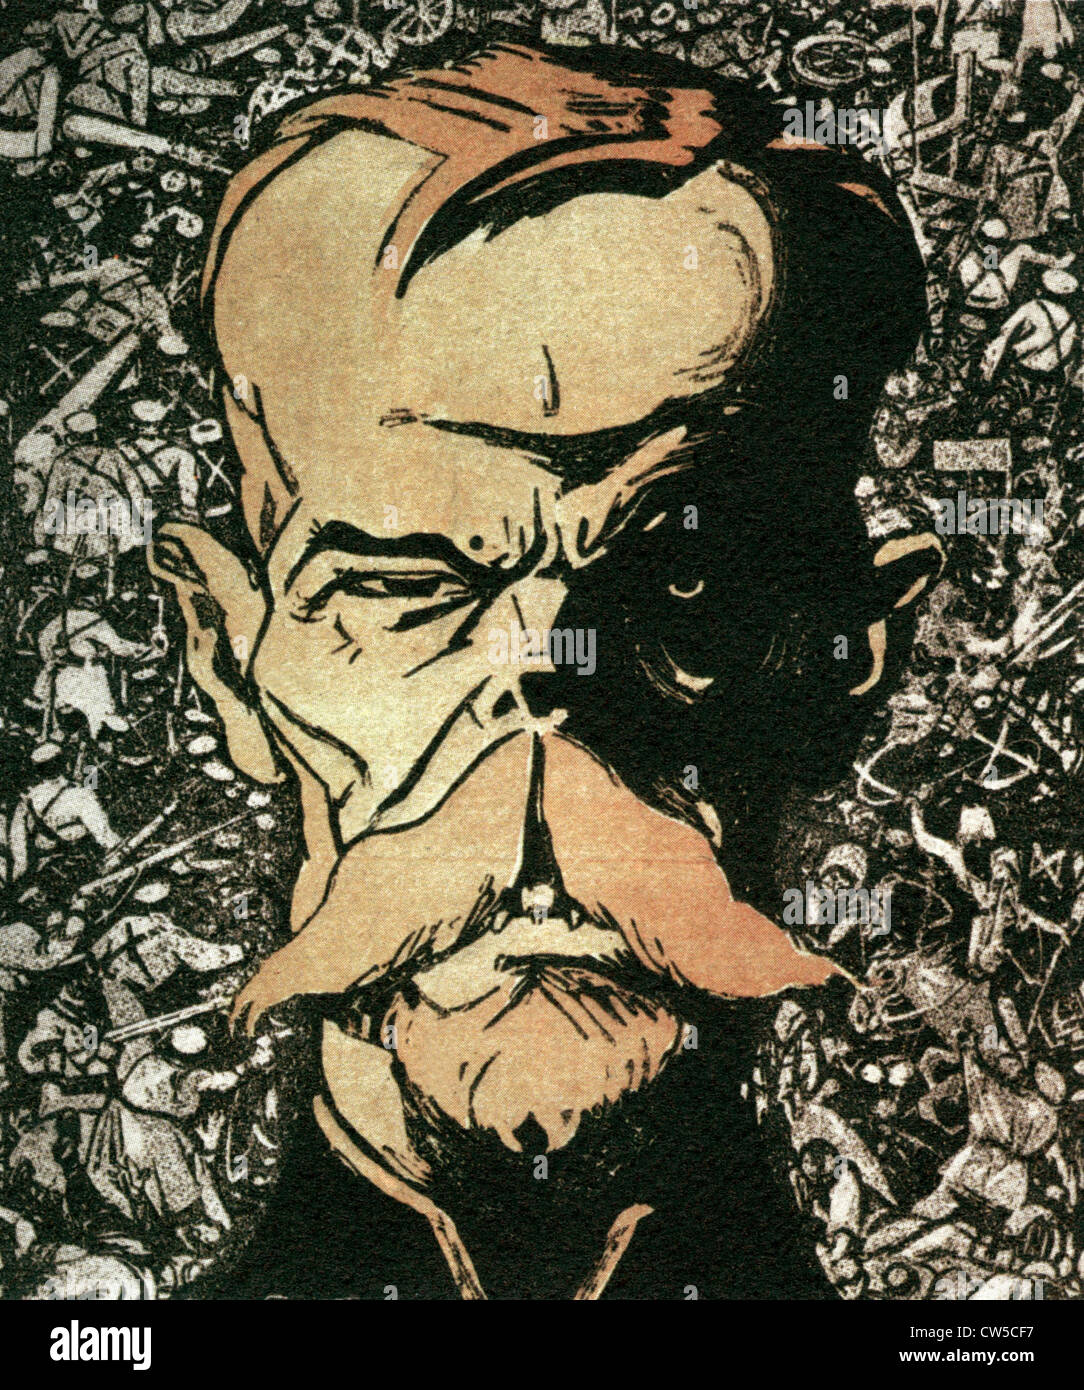 Galantara, caricature: 'The Insensitive' (Tsar Nicholas II) Stock Photo